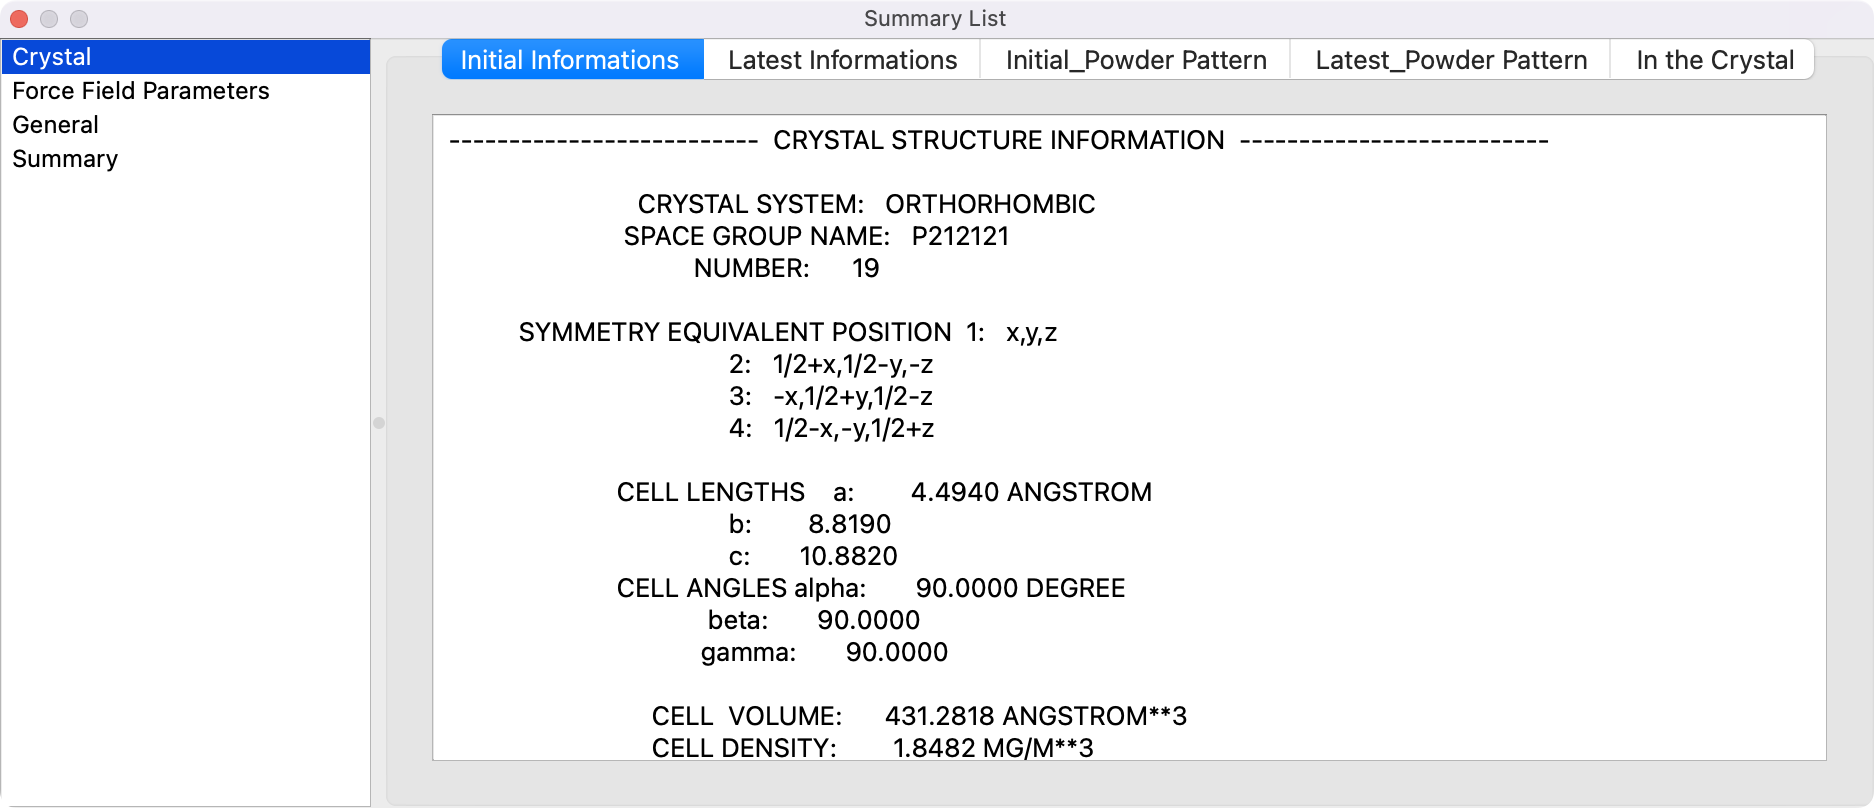 Crystal Summary